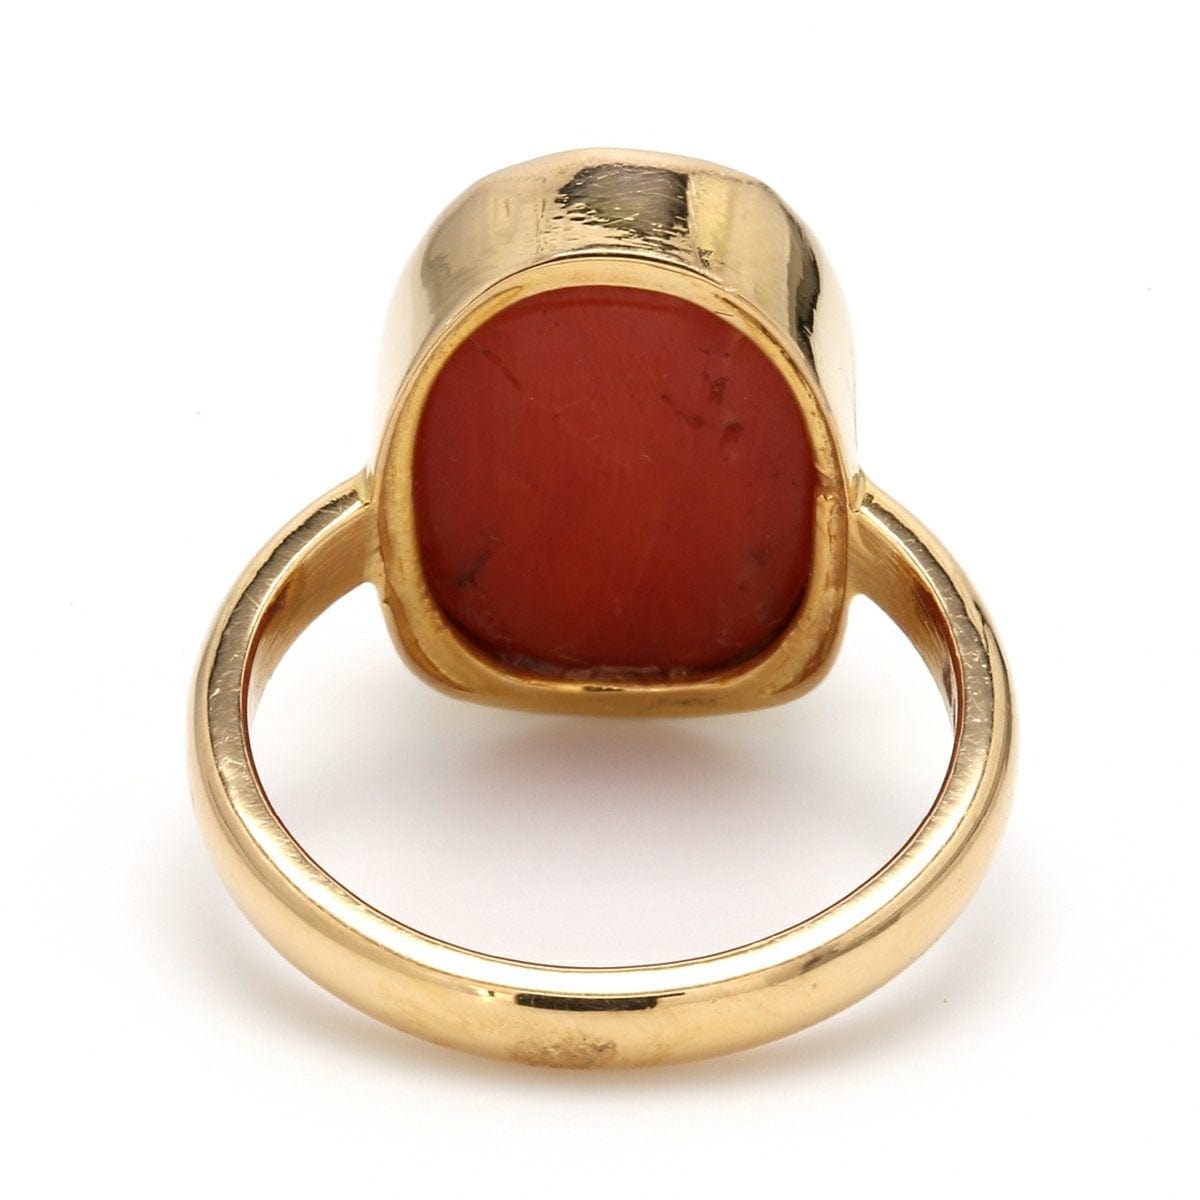 Shri Ji Store Red Coral Ring Adjustable| Moonga Ring Original Best Quality Moonga  Ring| Pure Moonga Stone Ring Original Red Coral Gemstone | Moongamunga Stone  Ring Price in India - Buy Shri